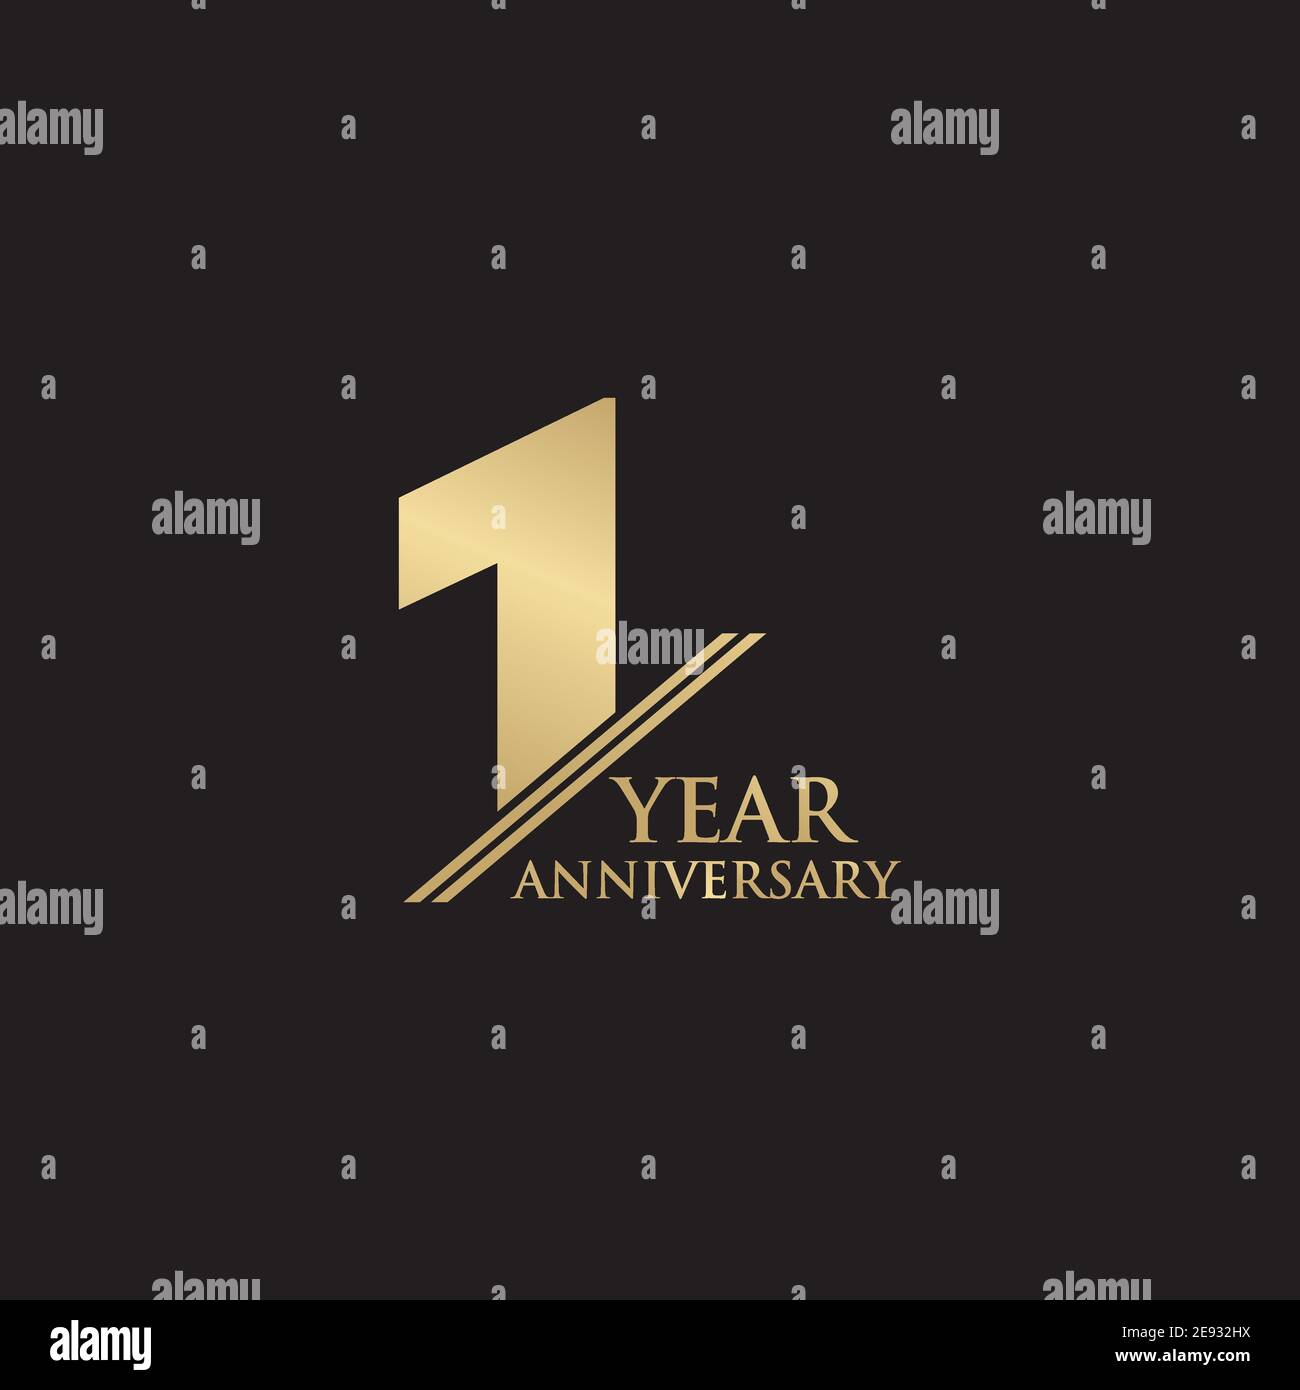 1st year anniversary logo design vector illustration template Stock Vector